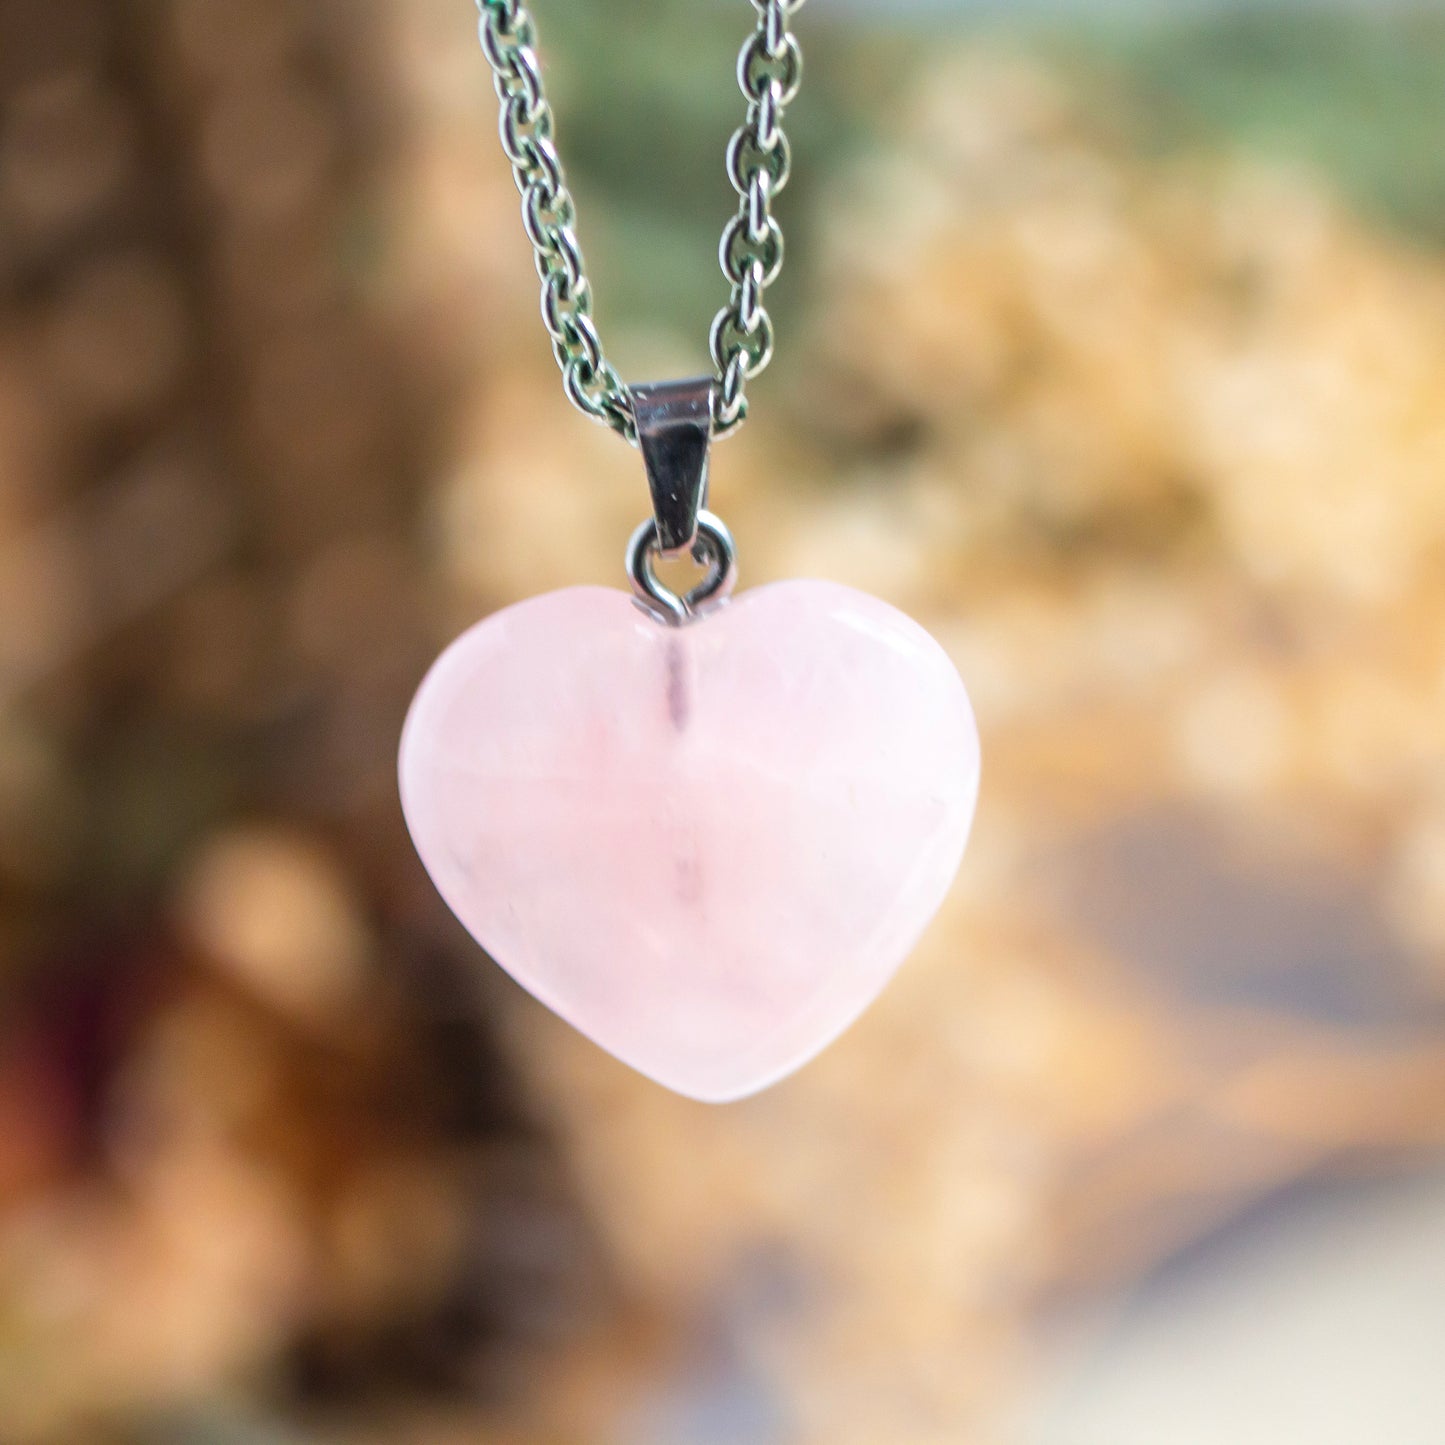 Rose Quartz Crystal Heart Pendant